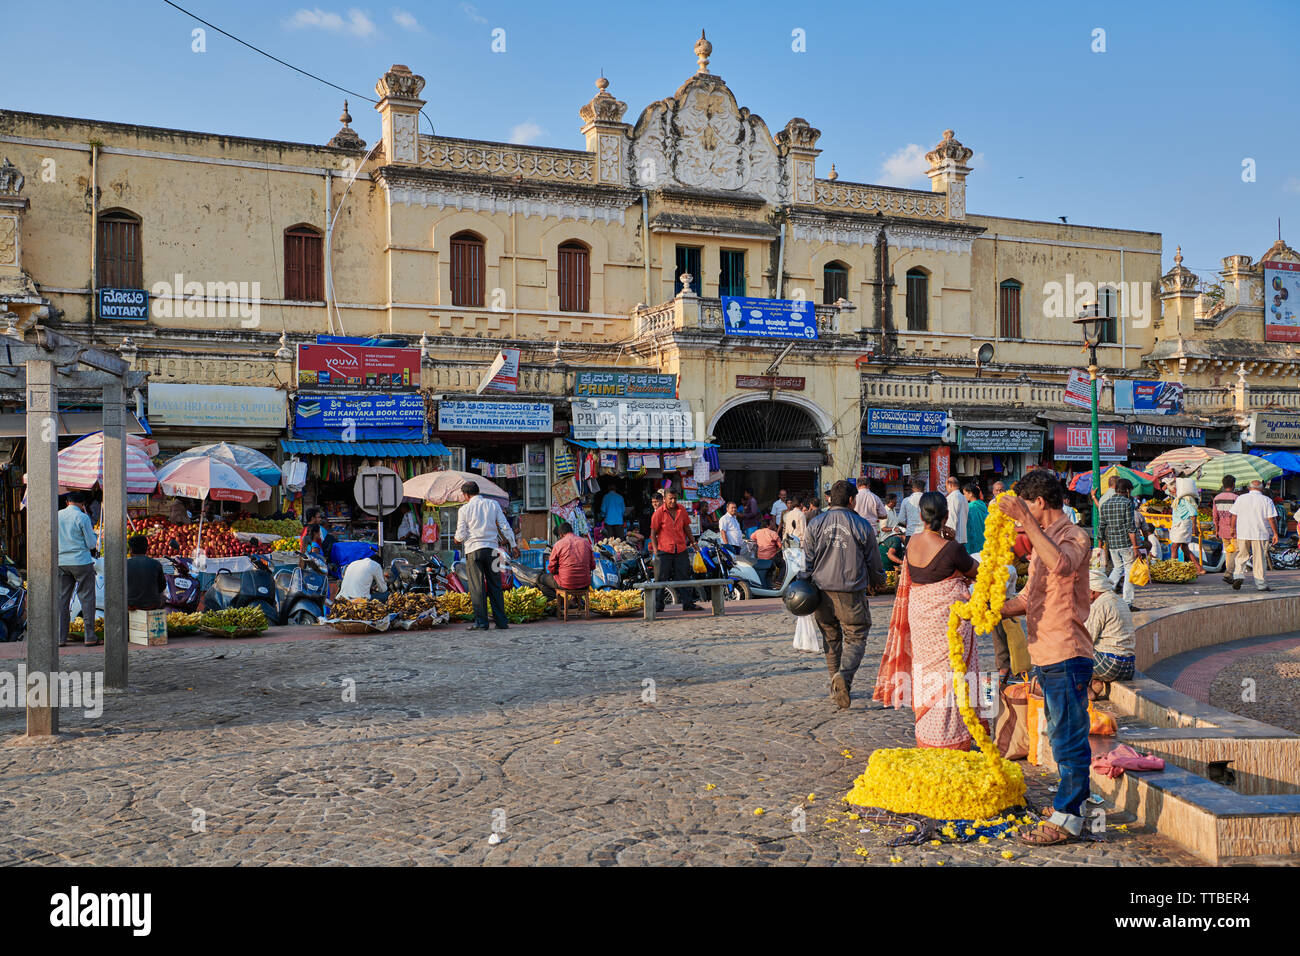 Devaraja marché de fruits et légumes, Mysore, Karnataka, Inde Banque D'Images